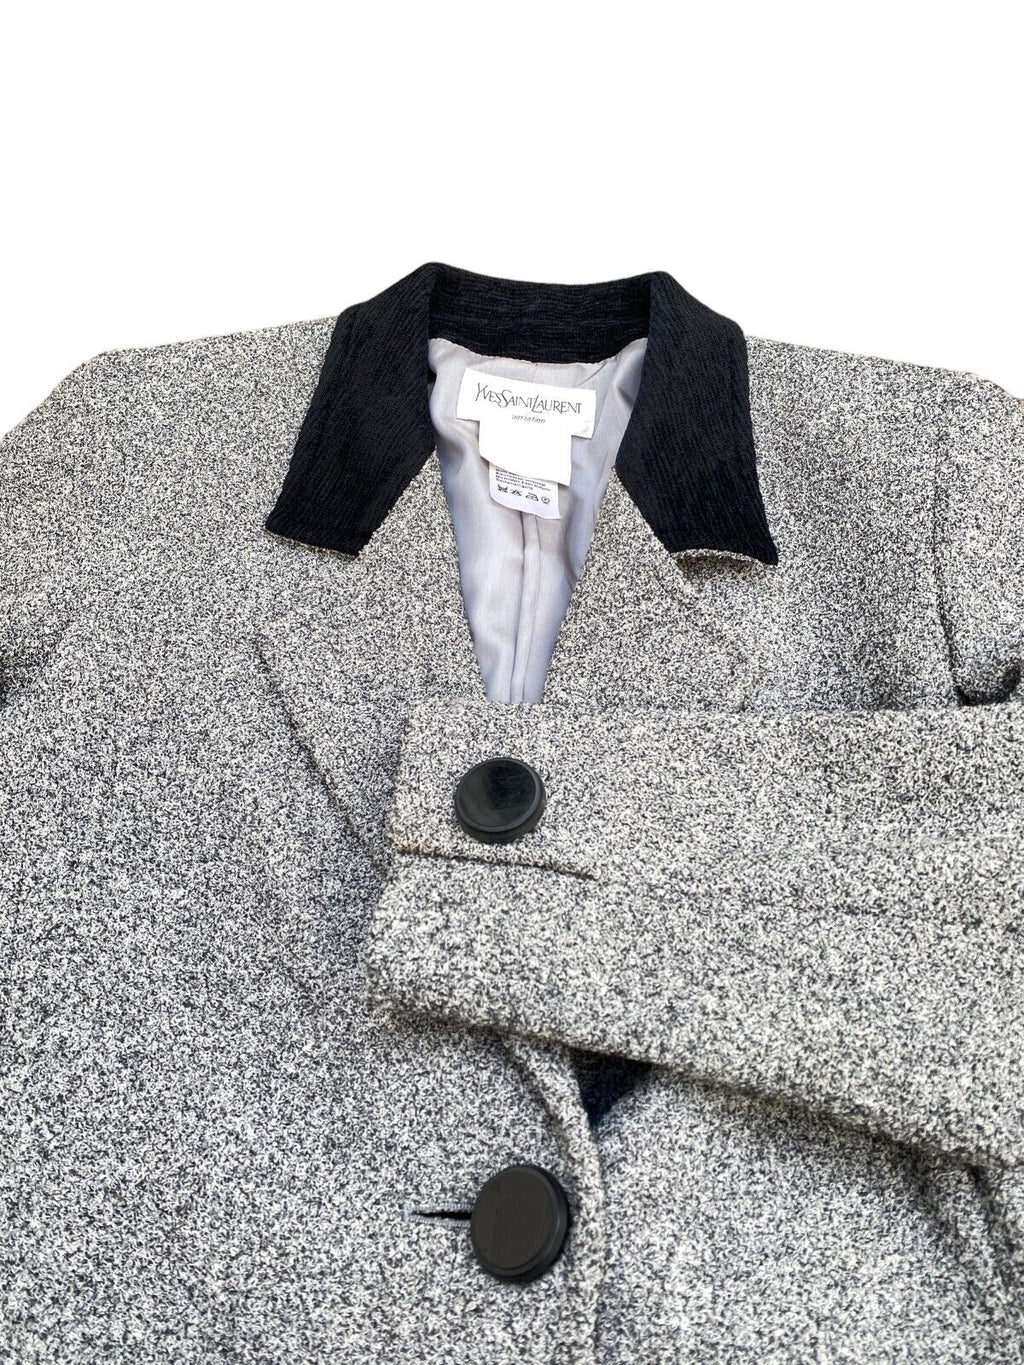 Hiver 1994 Grey Wool Blazer Jacket Size 38 M